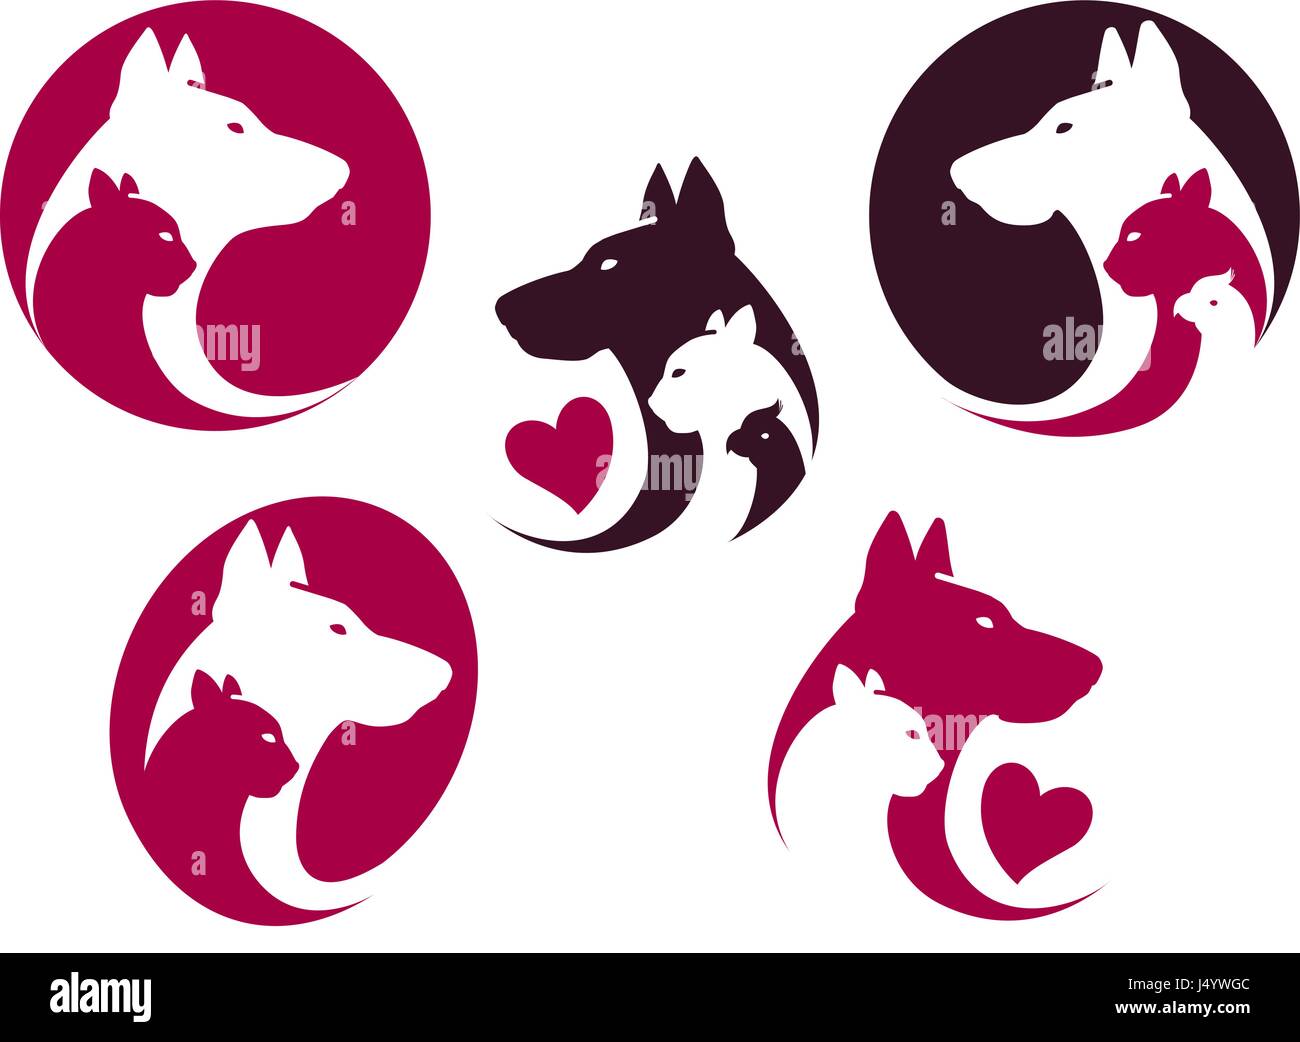 Pet shop, label set. Animals, cat, dog, parrot icon or logo. Vector illustration Stock Vector